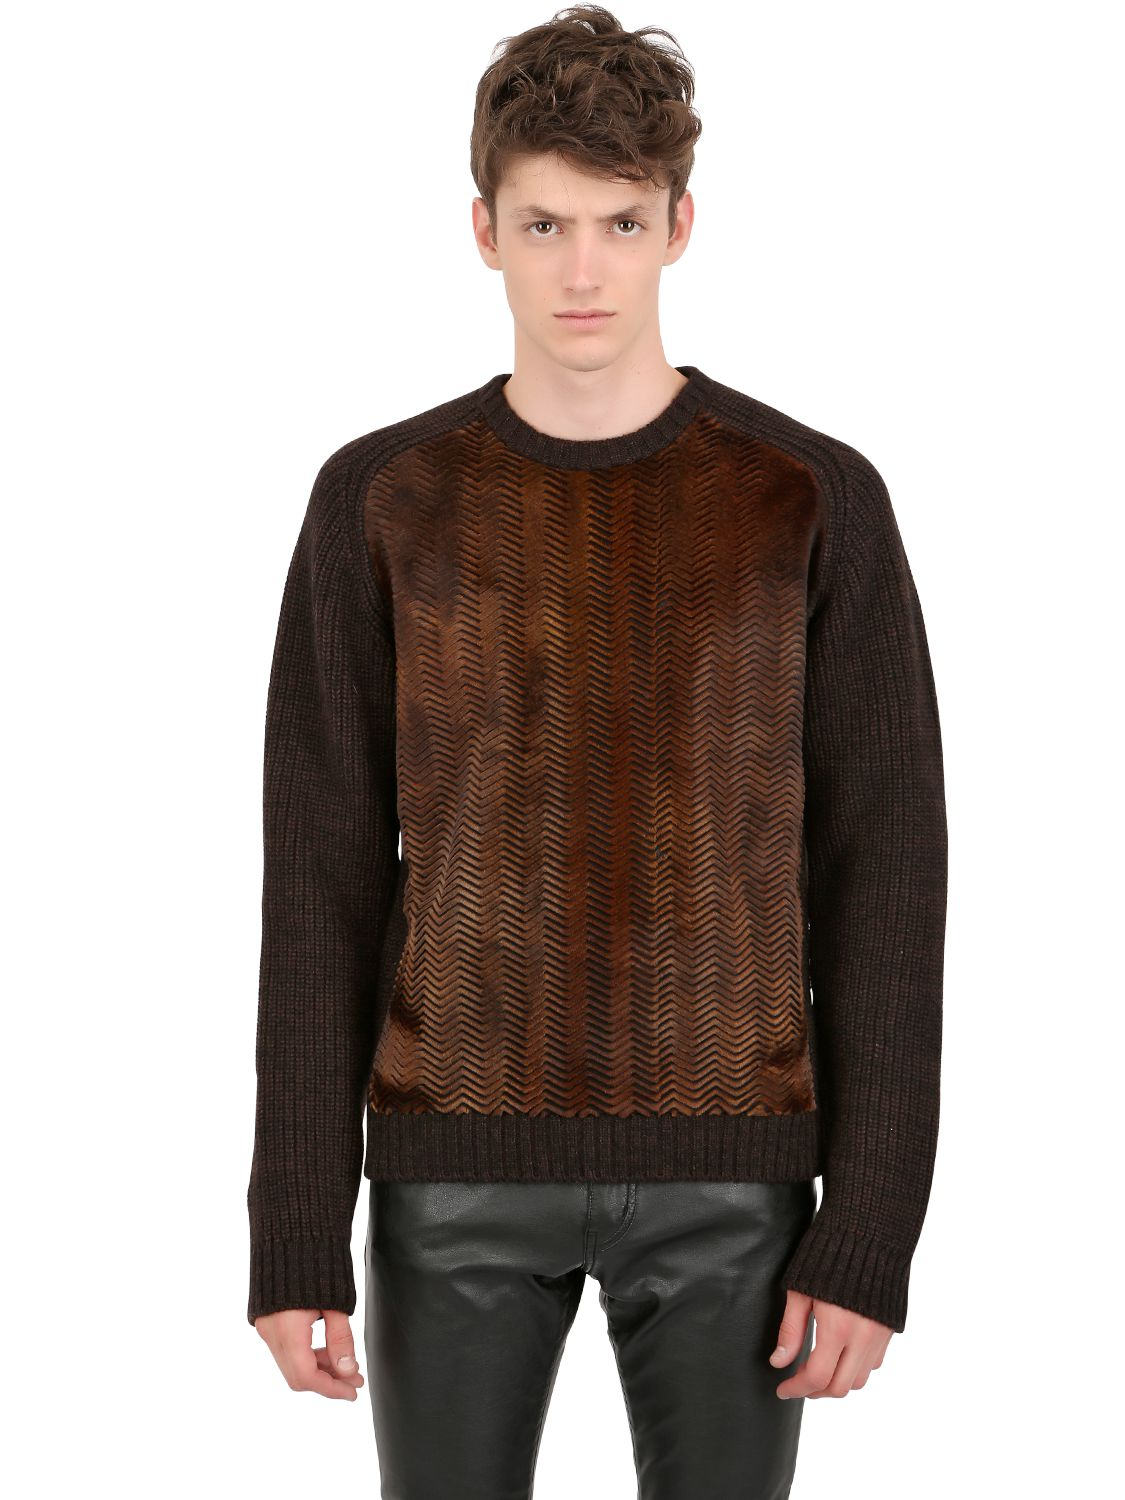 Lyst - Just cavalli Kangaroo Fur Wool Blend Sweater in Brown for Men